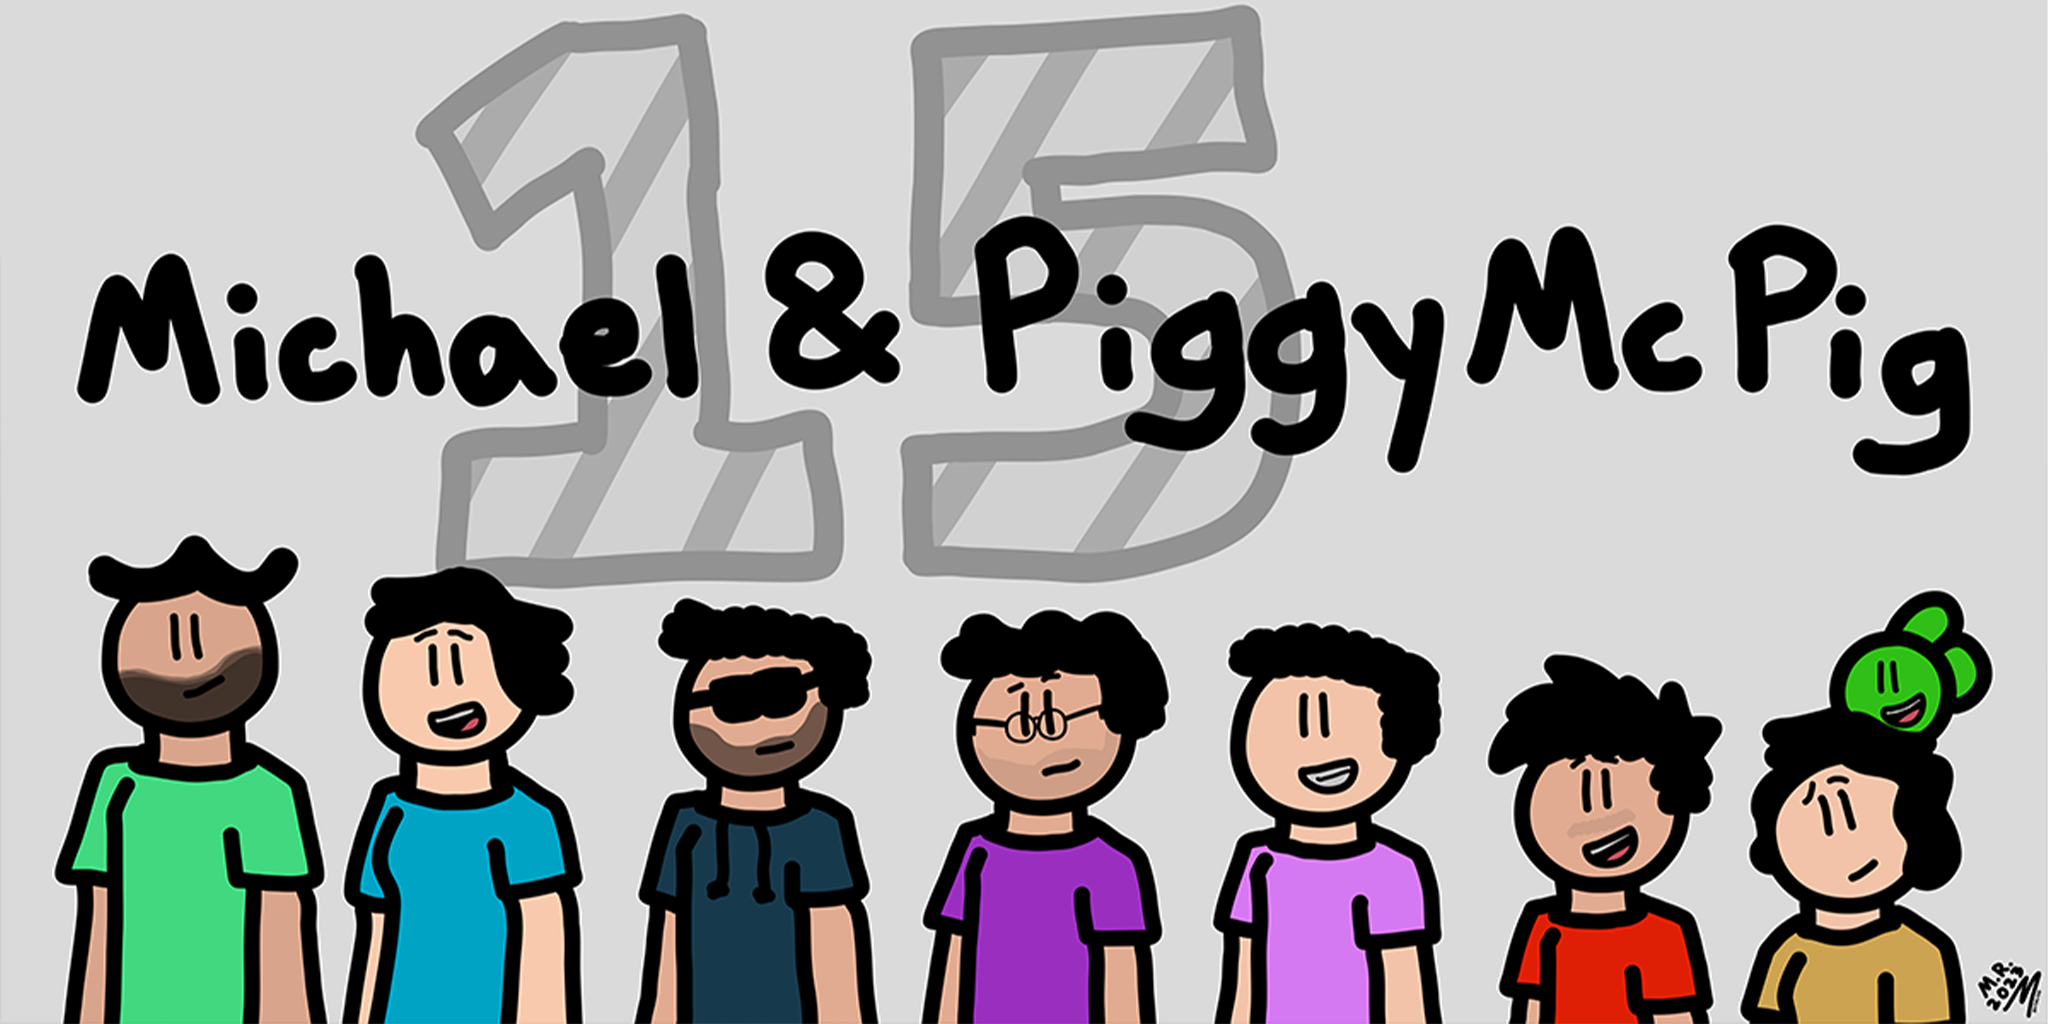 Michael & PiggyMcPig